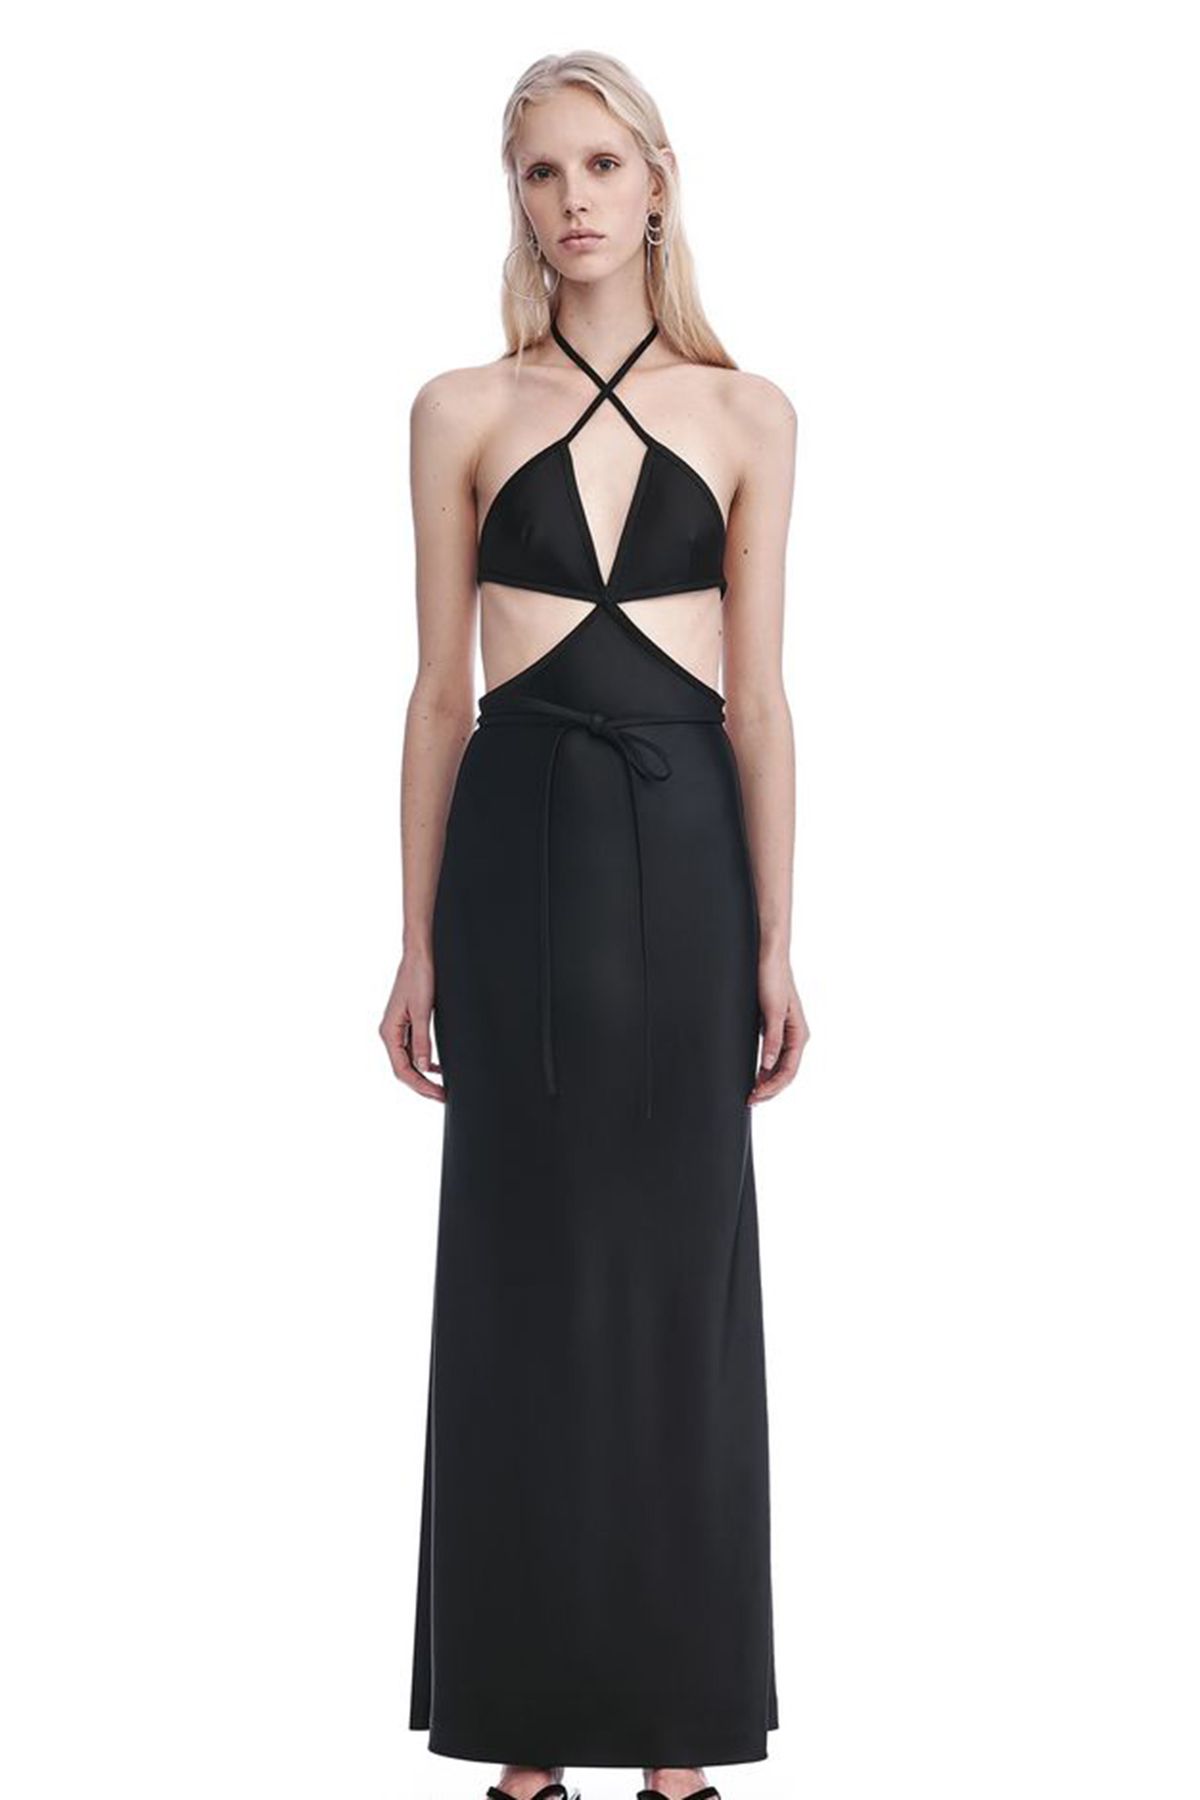 Alexander Wang Full-Length Bikini Column Gown, $995